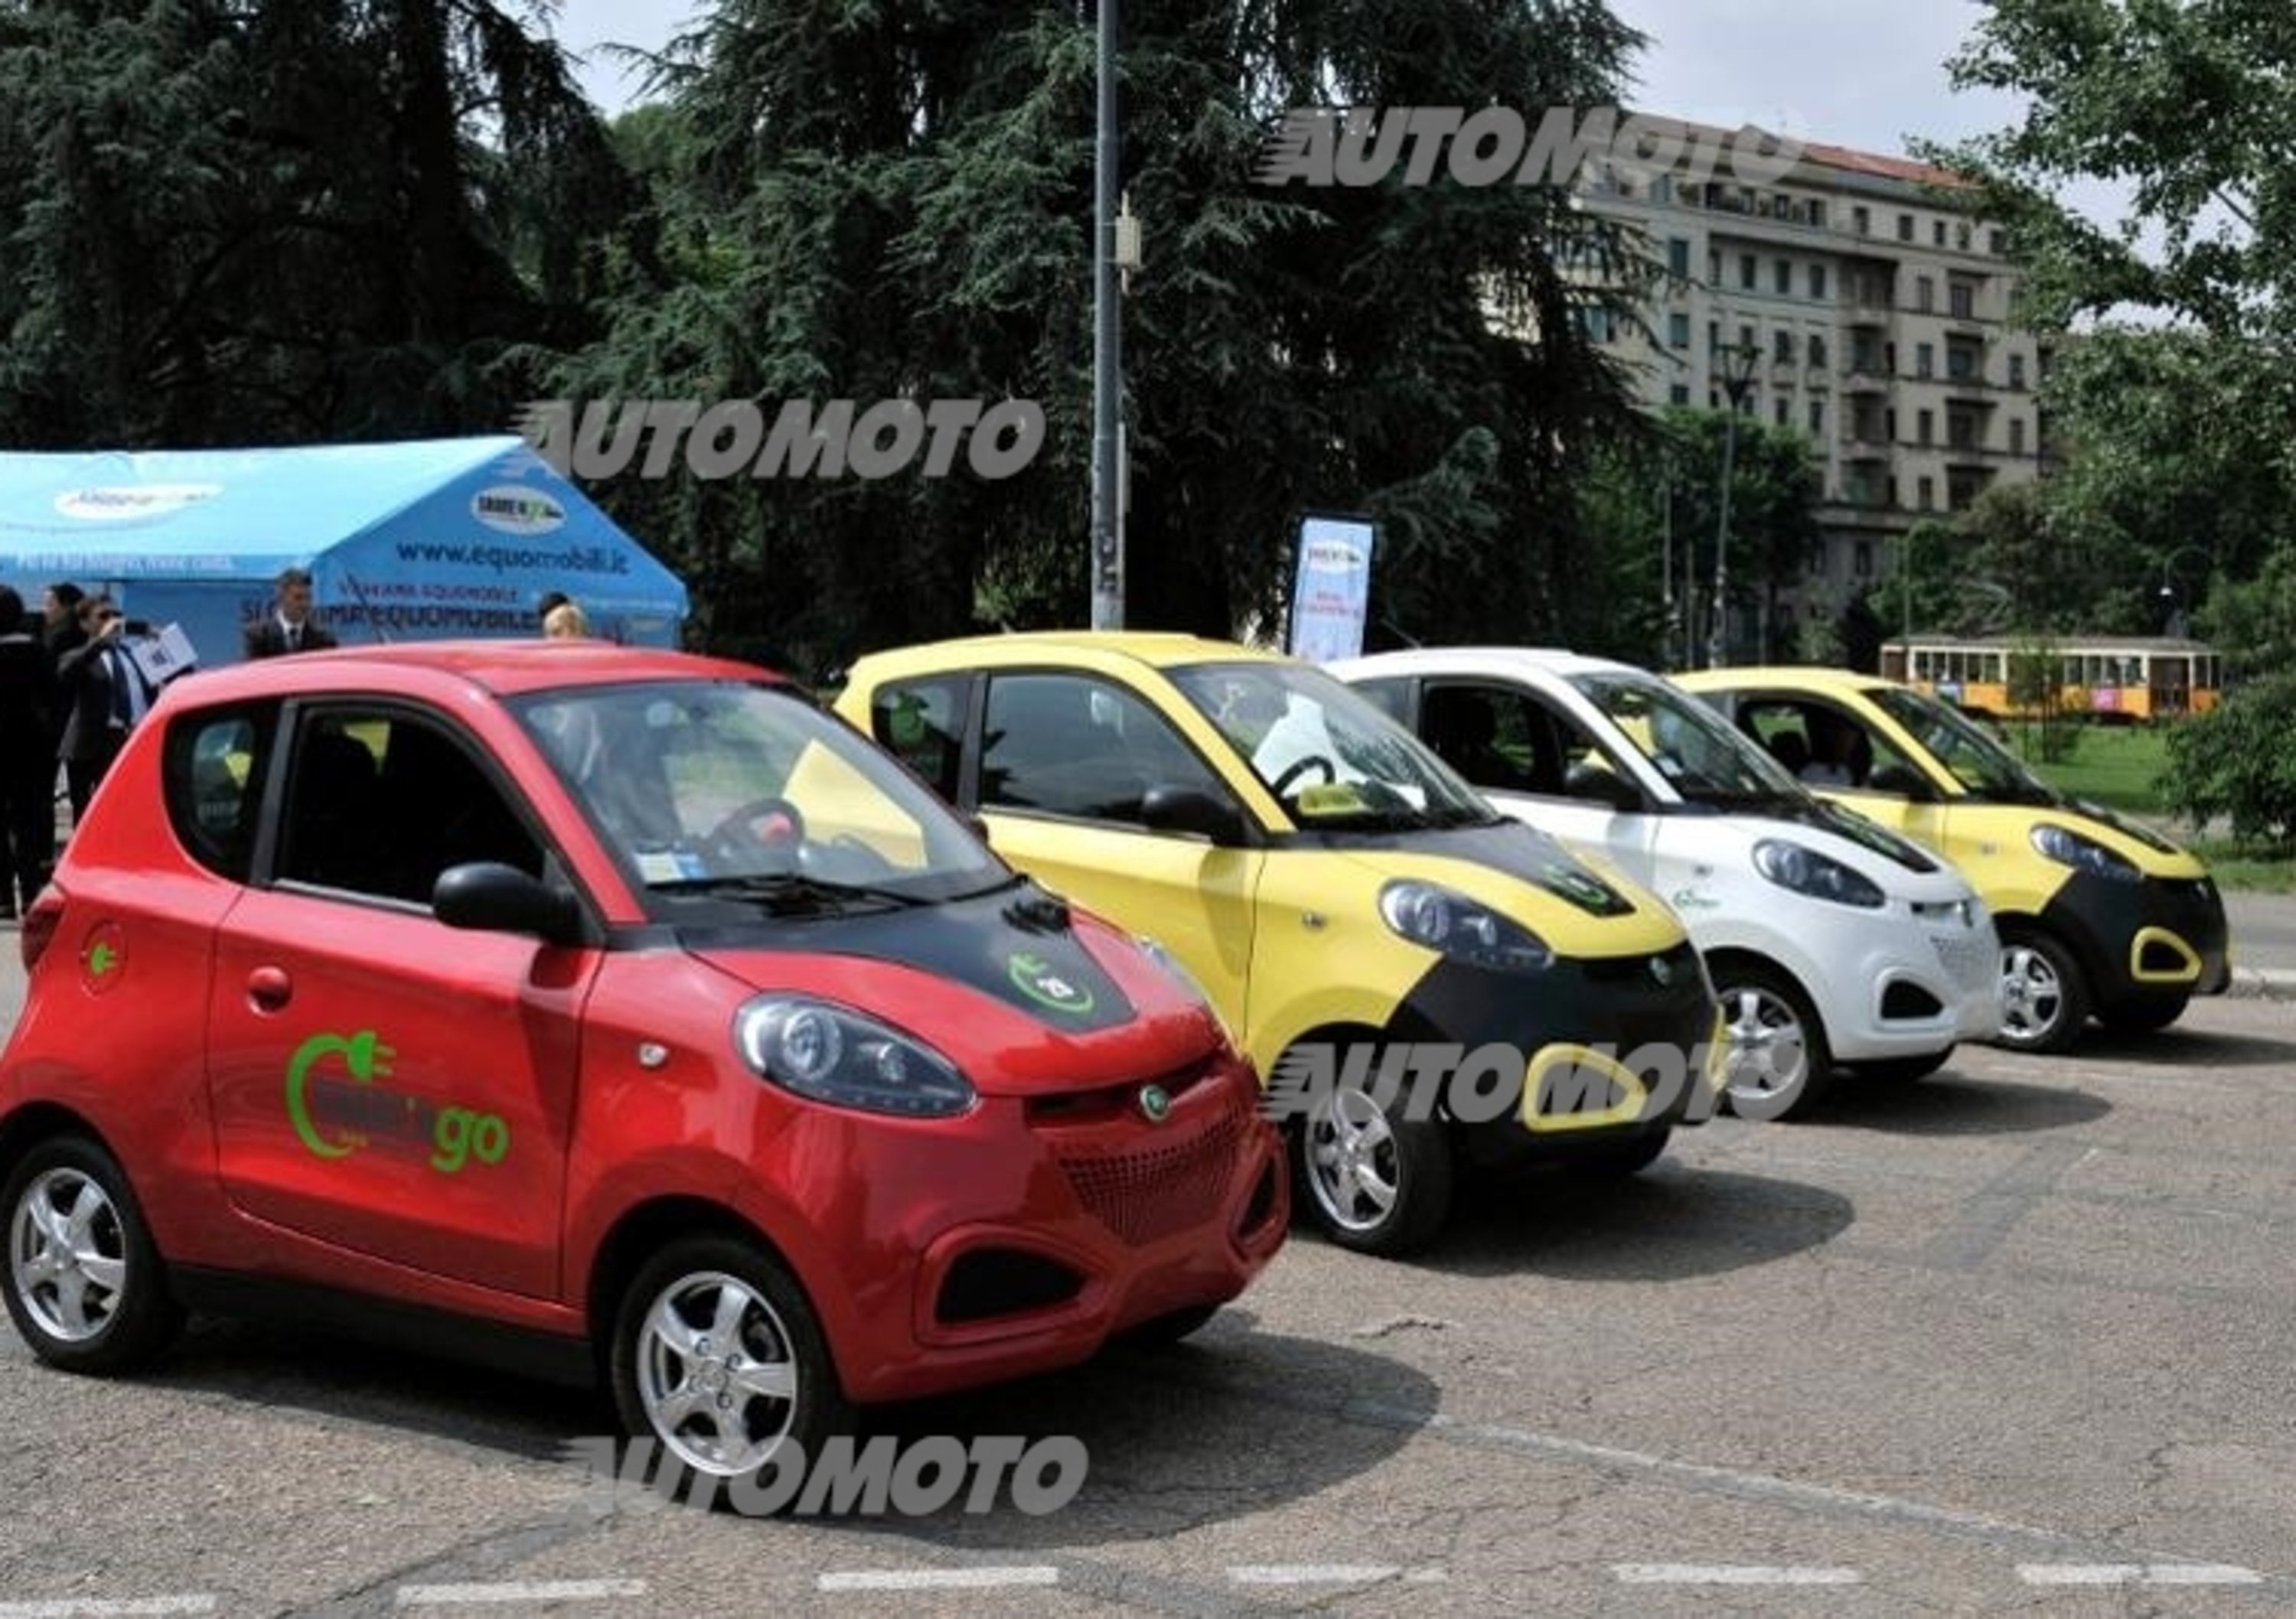 Car sharing: a Milano arriva Share&#039;nGo, l&#039;elettrica economica